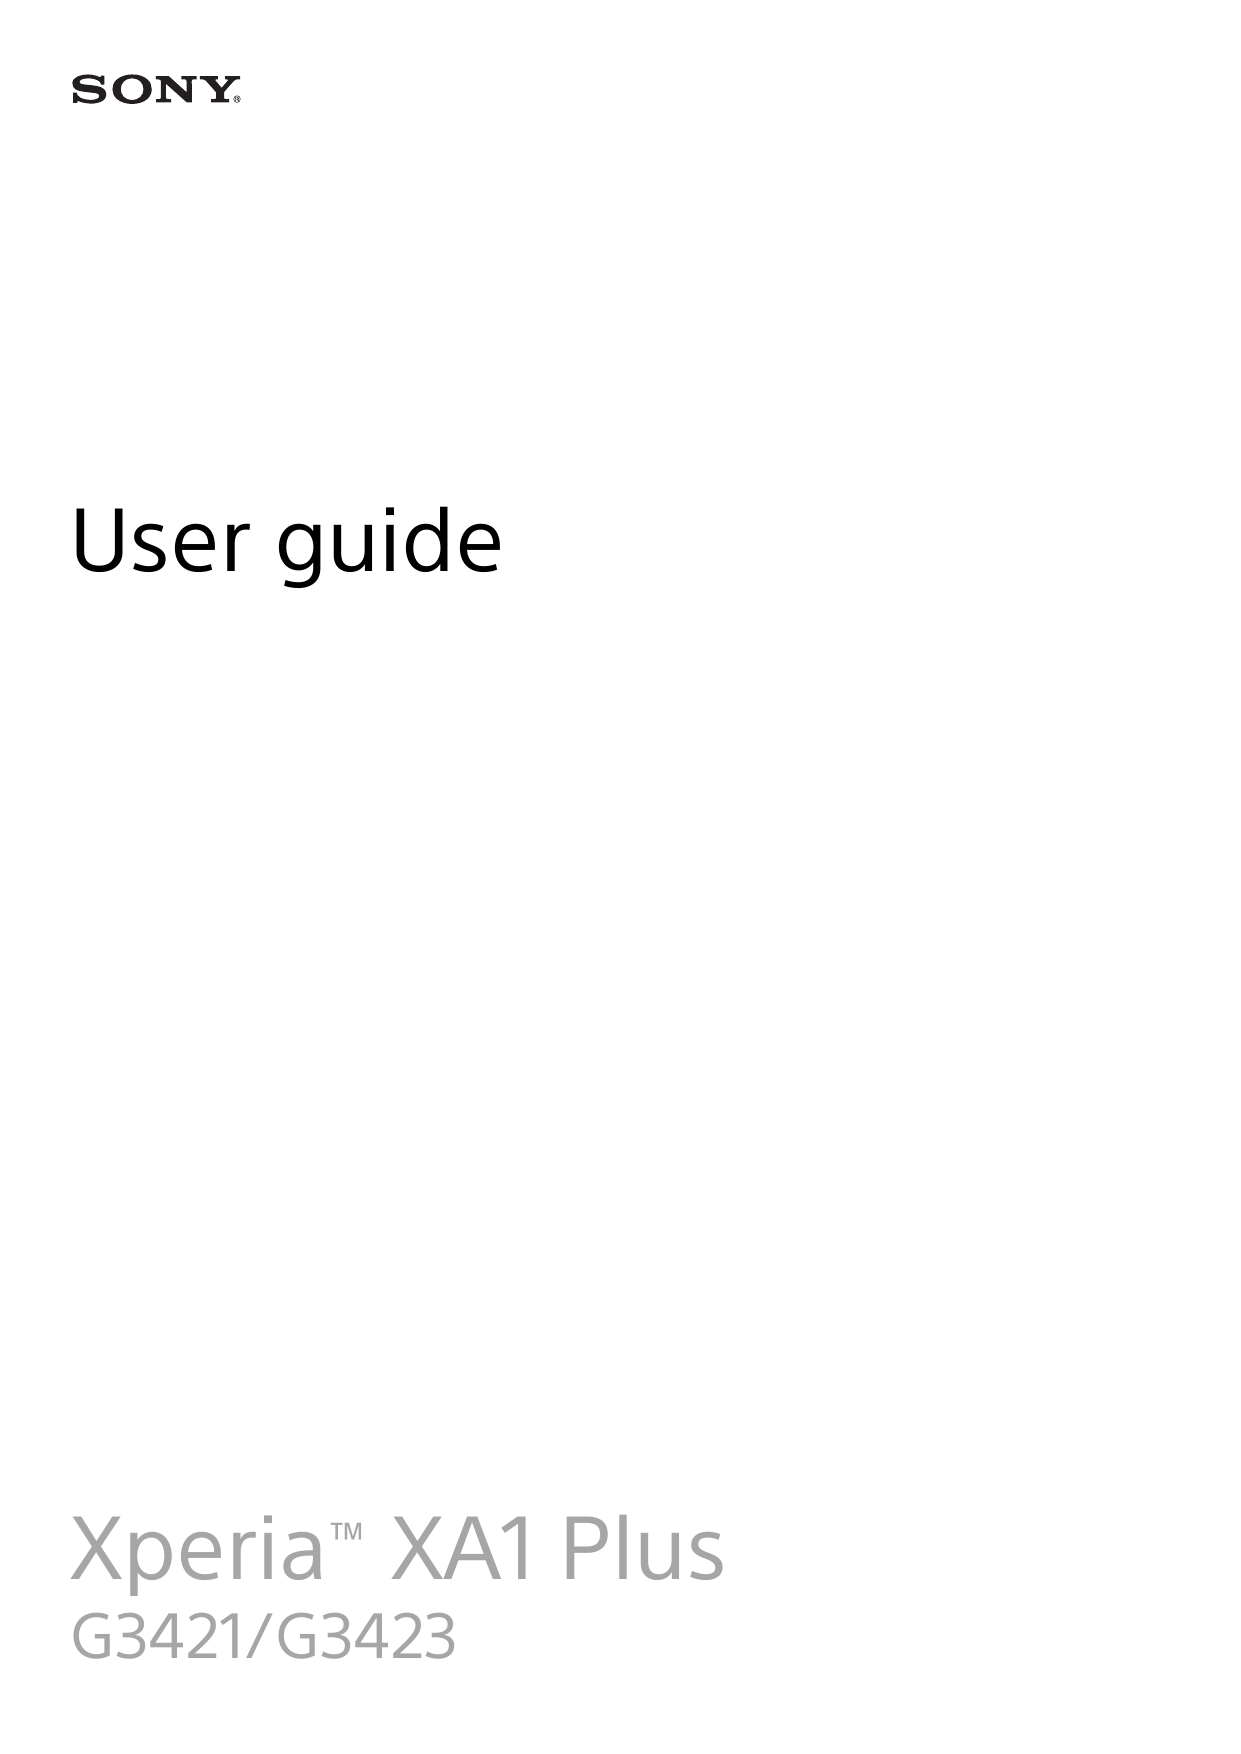 Sony Xperia Xa1 Plus User Manual Pdf